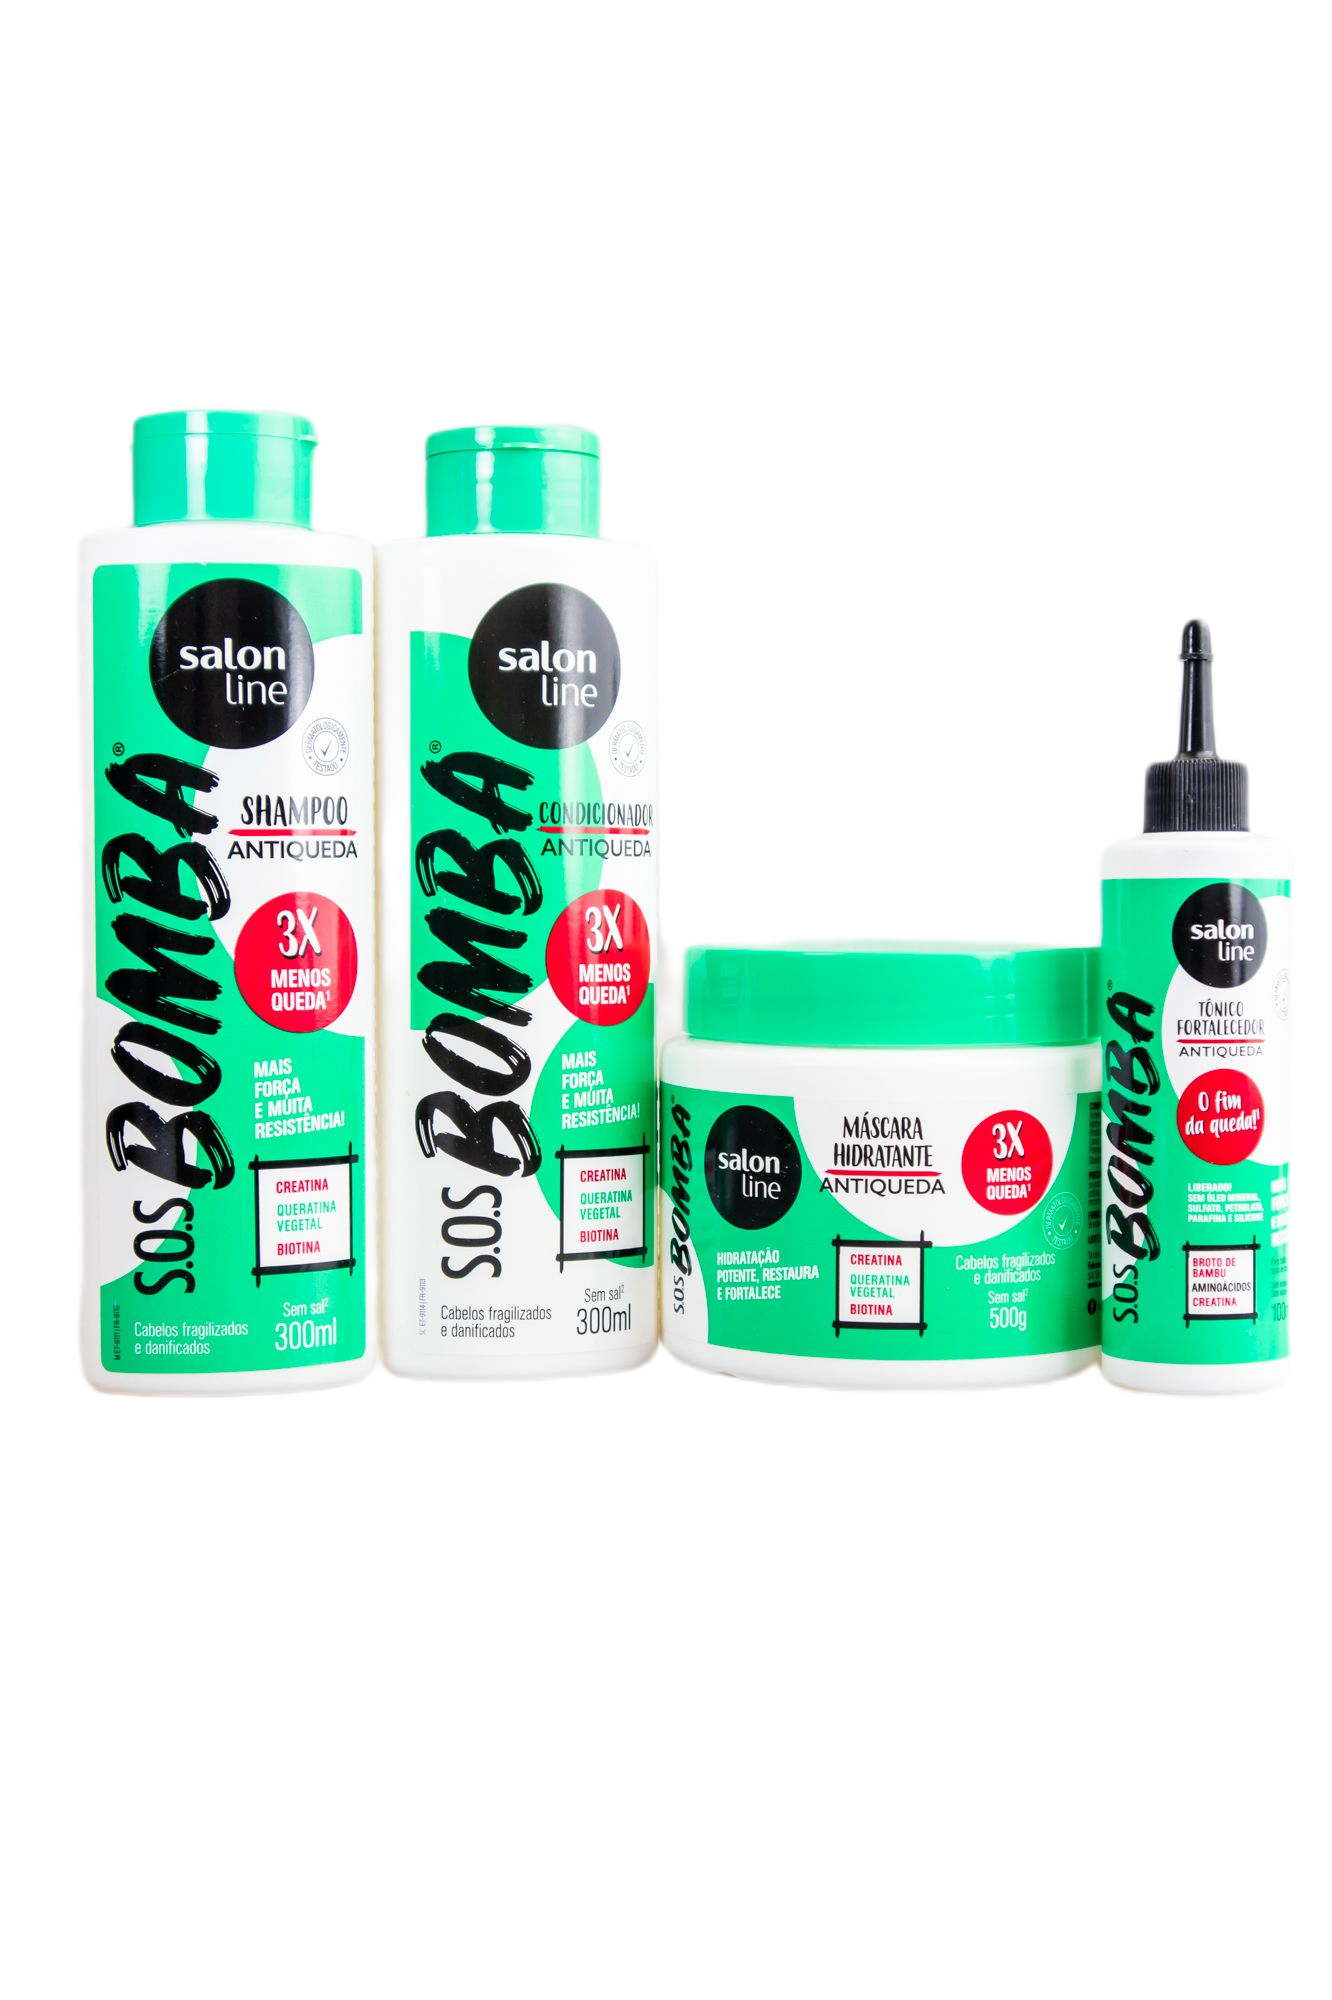 Salon Line Brazilian Keratin Treatment SOS Bomba Anti Fall Vegan Strength Resistance Treatment 4 Products - Salon Line